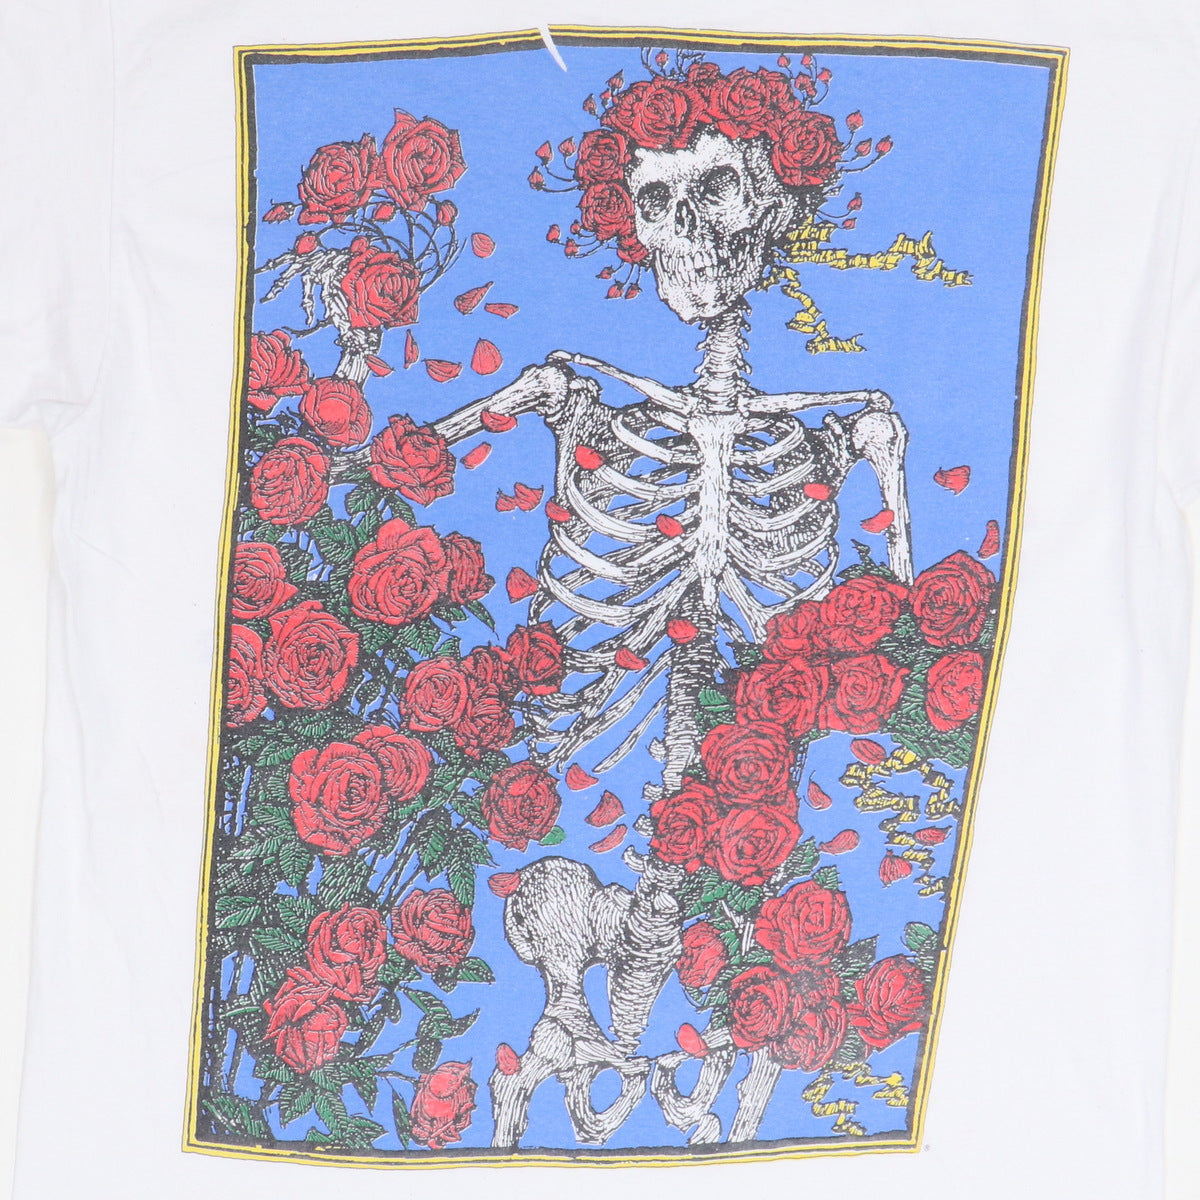 1990 Grateful Dead Bertha 20th Anniversary Shirt